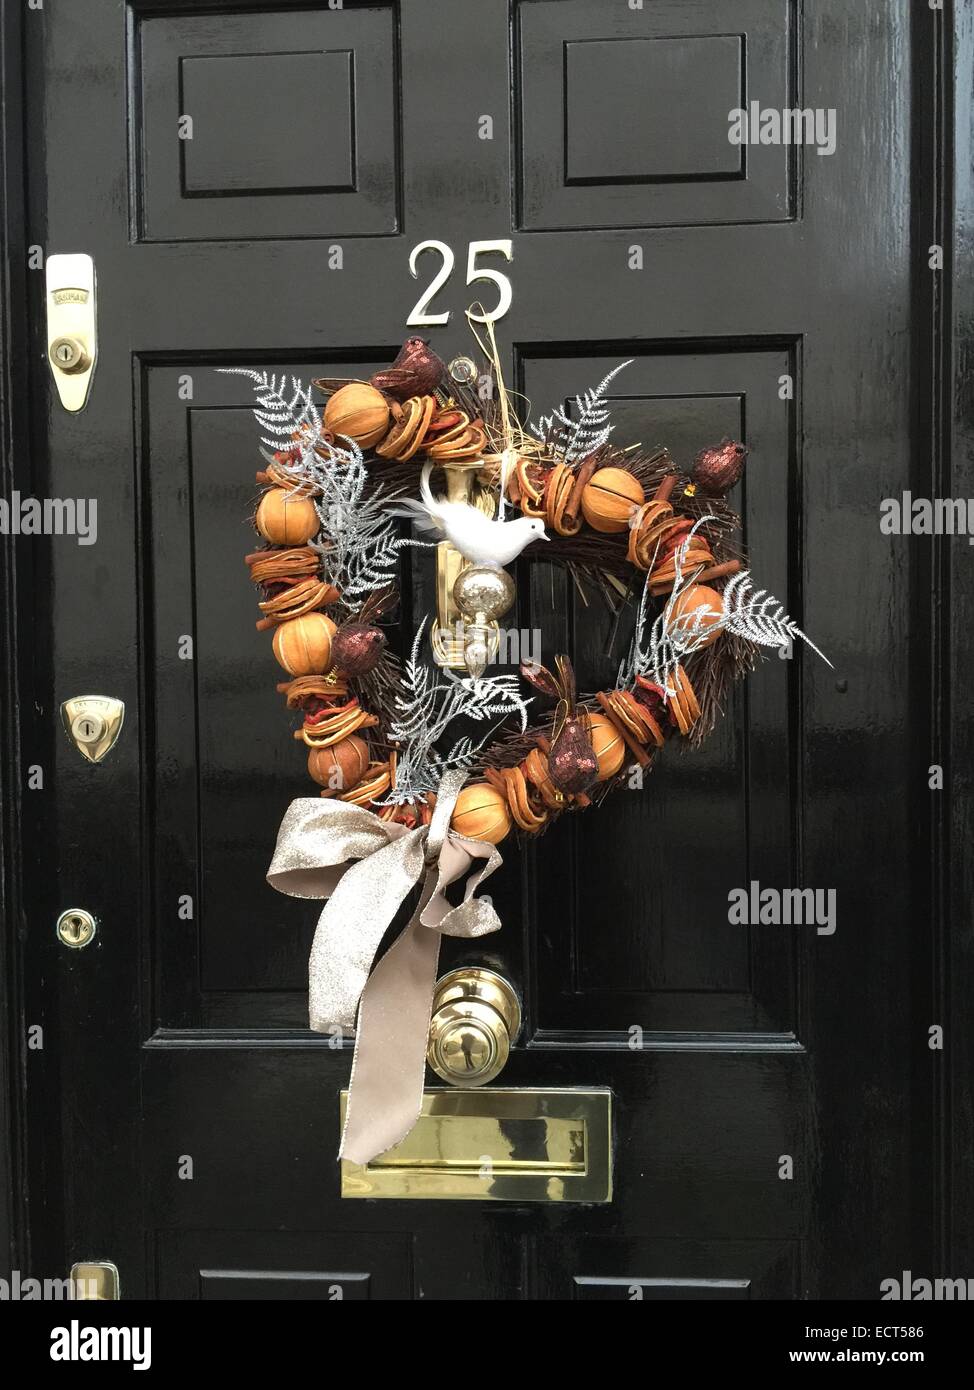 A Christmas decorative wreath on a door in Belgravia, London UK. Stock Photo